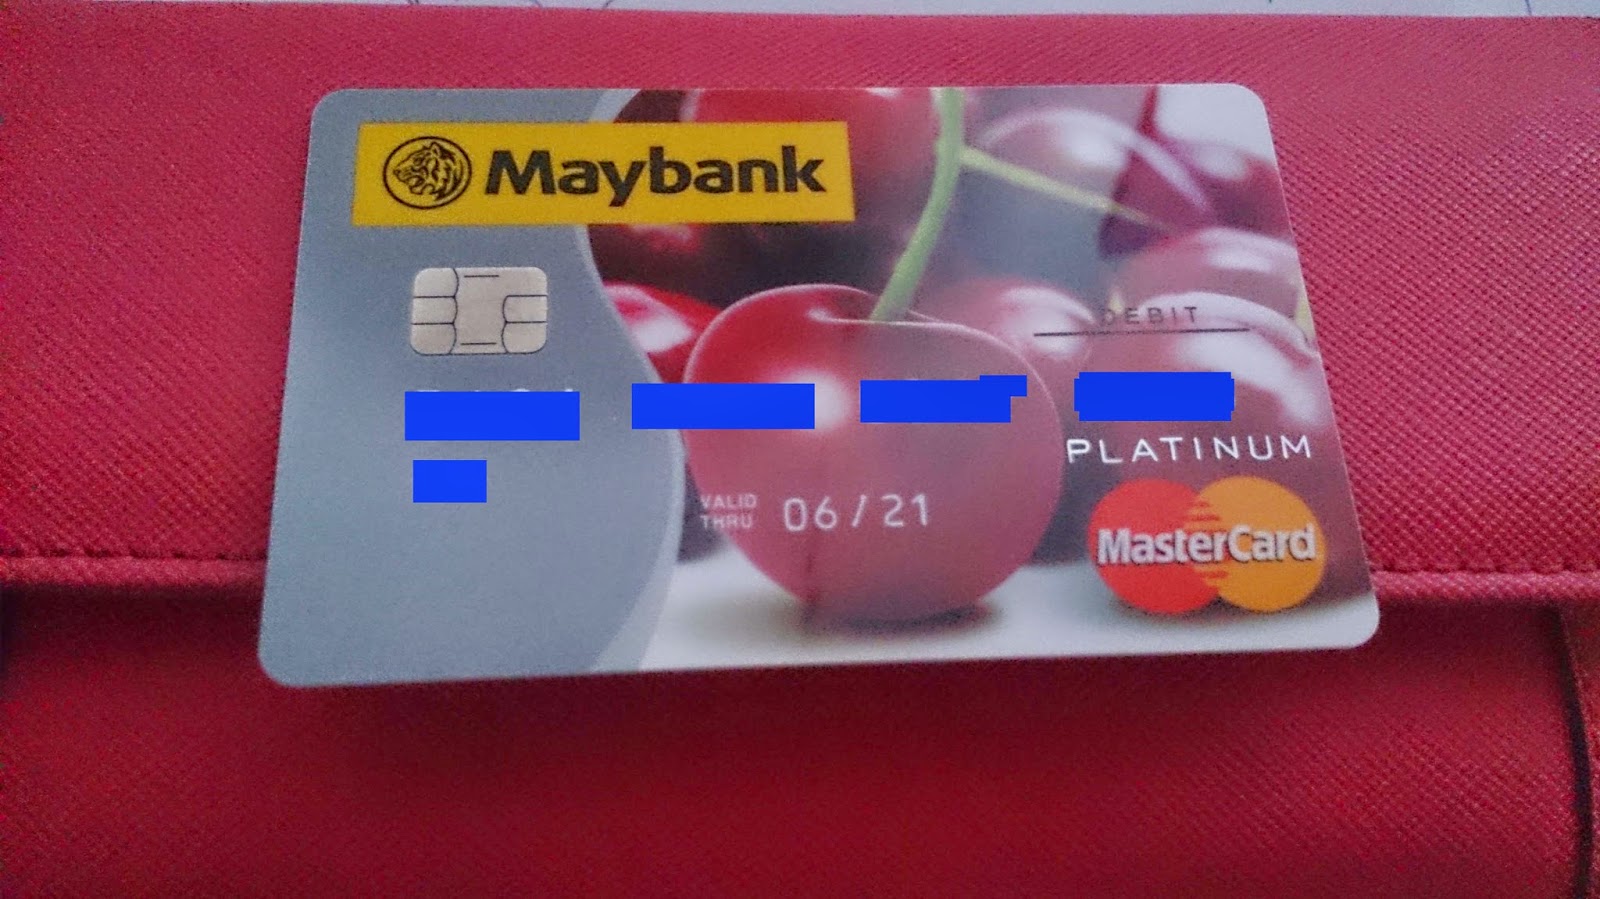 KLSE TALK - 歪歪理财记事本: Maybank MasterCard Platinum Debit : 白金Debit Card